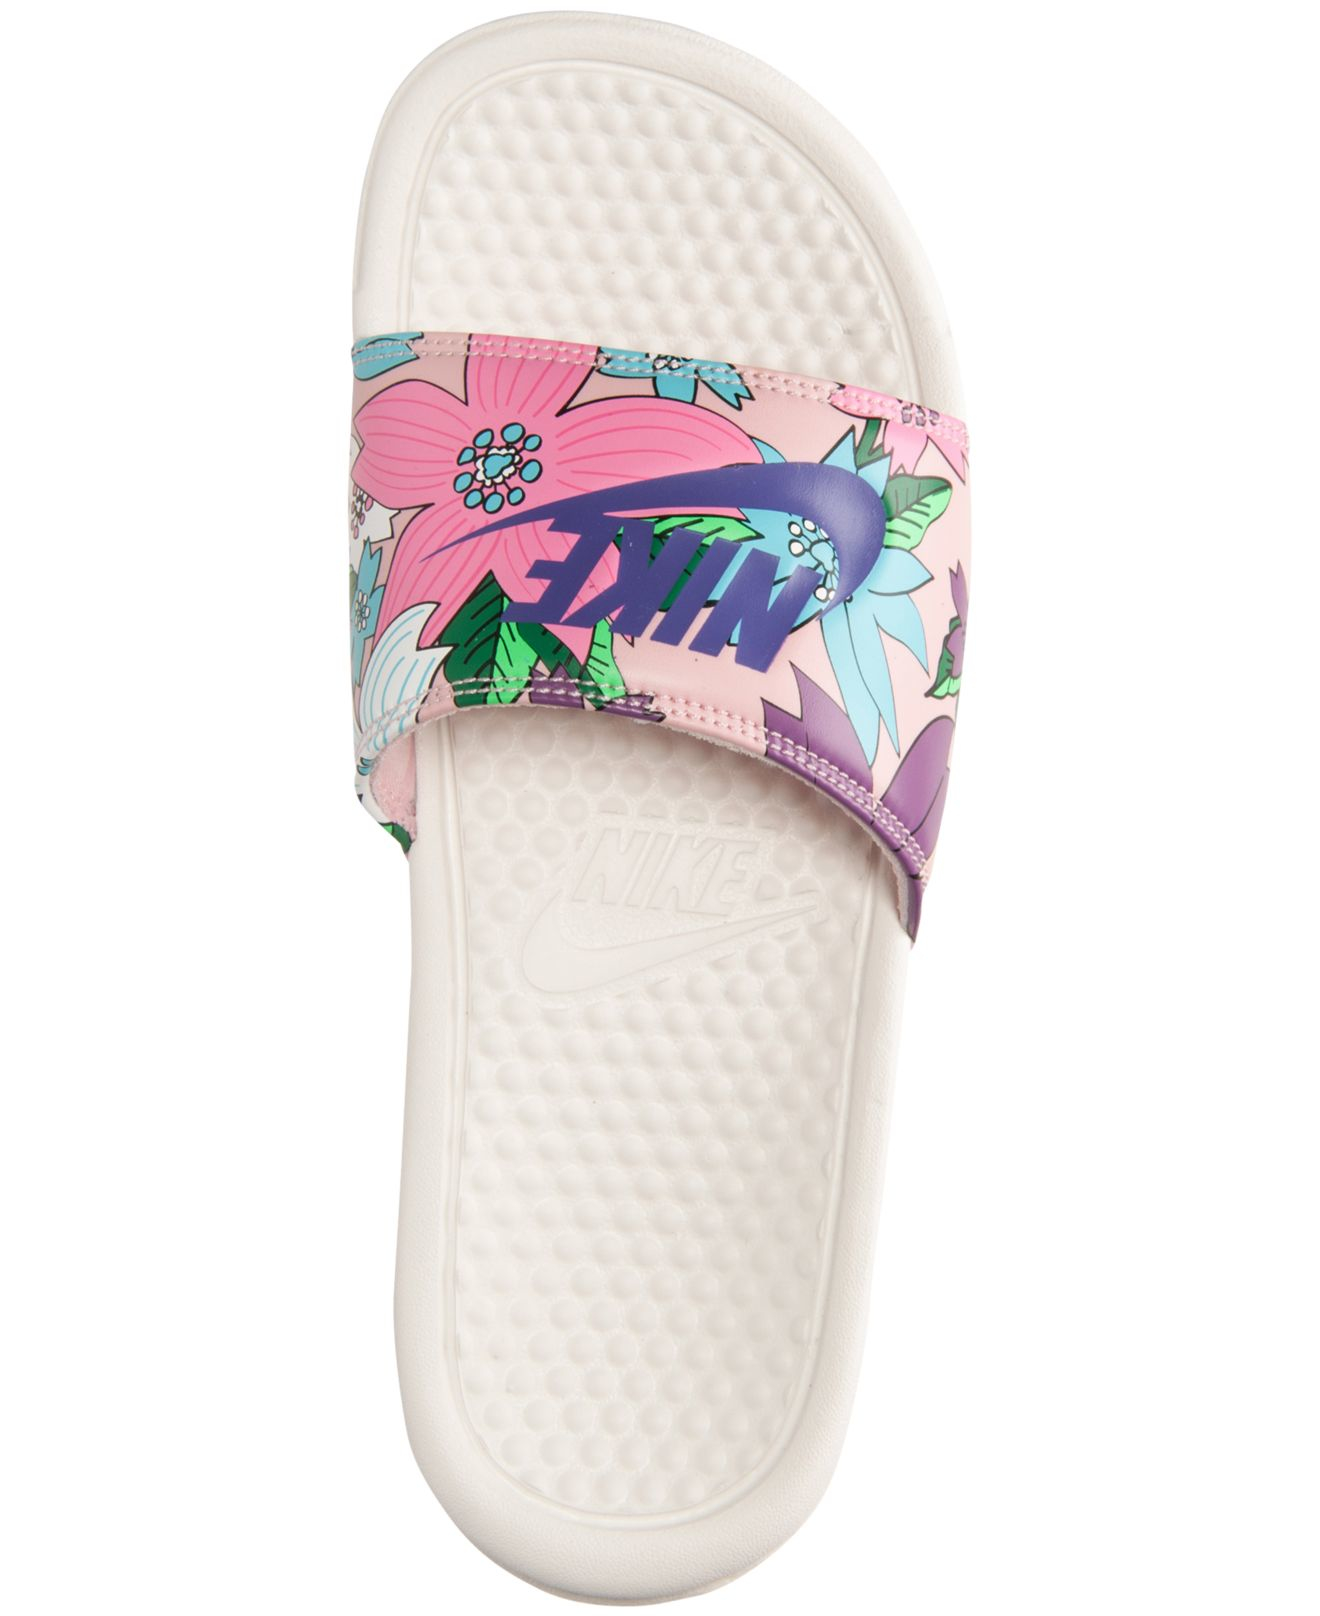 Nike Women's Benassi Jdi Print Slide Sandals From Finish Line in Pink | Lyst